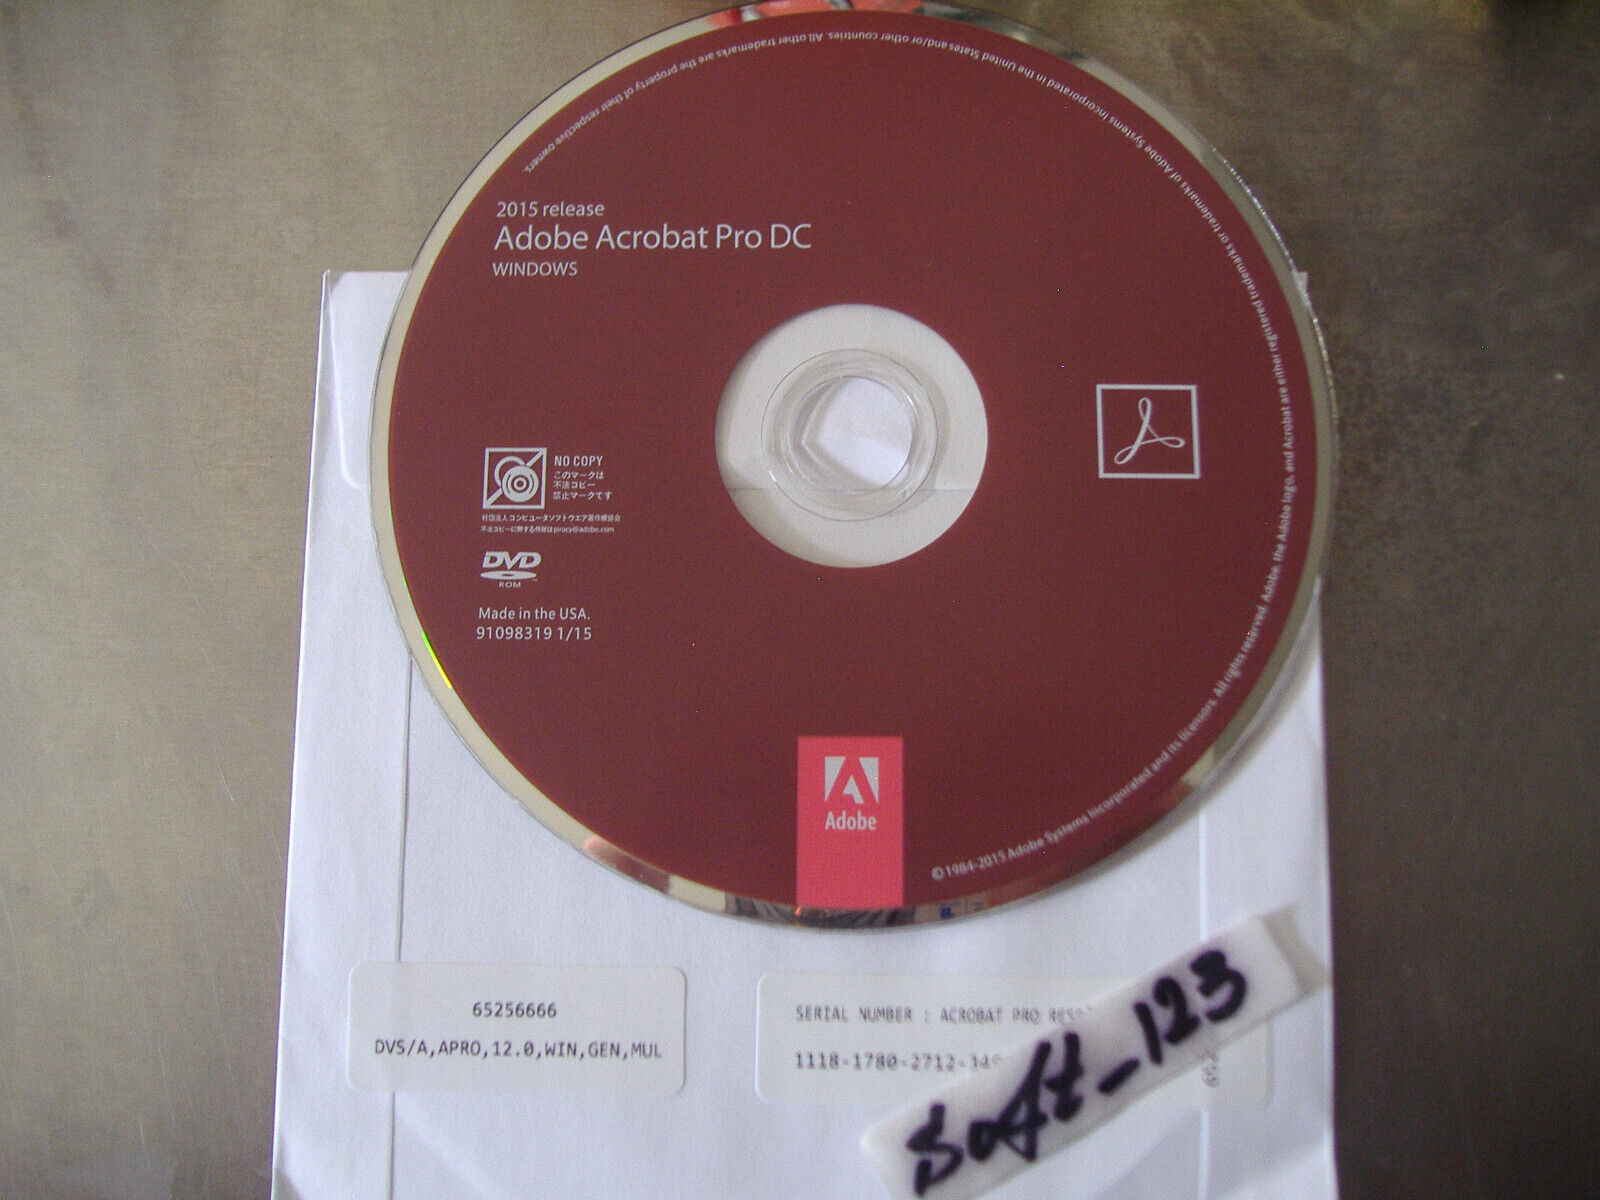 Adobe Acrobat Pro DC 2015 Release Full Windows for 2 PC =PERMANENT VERSION=